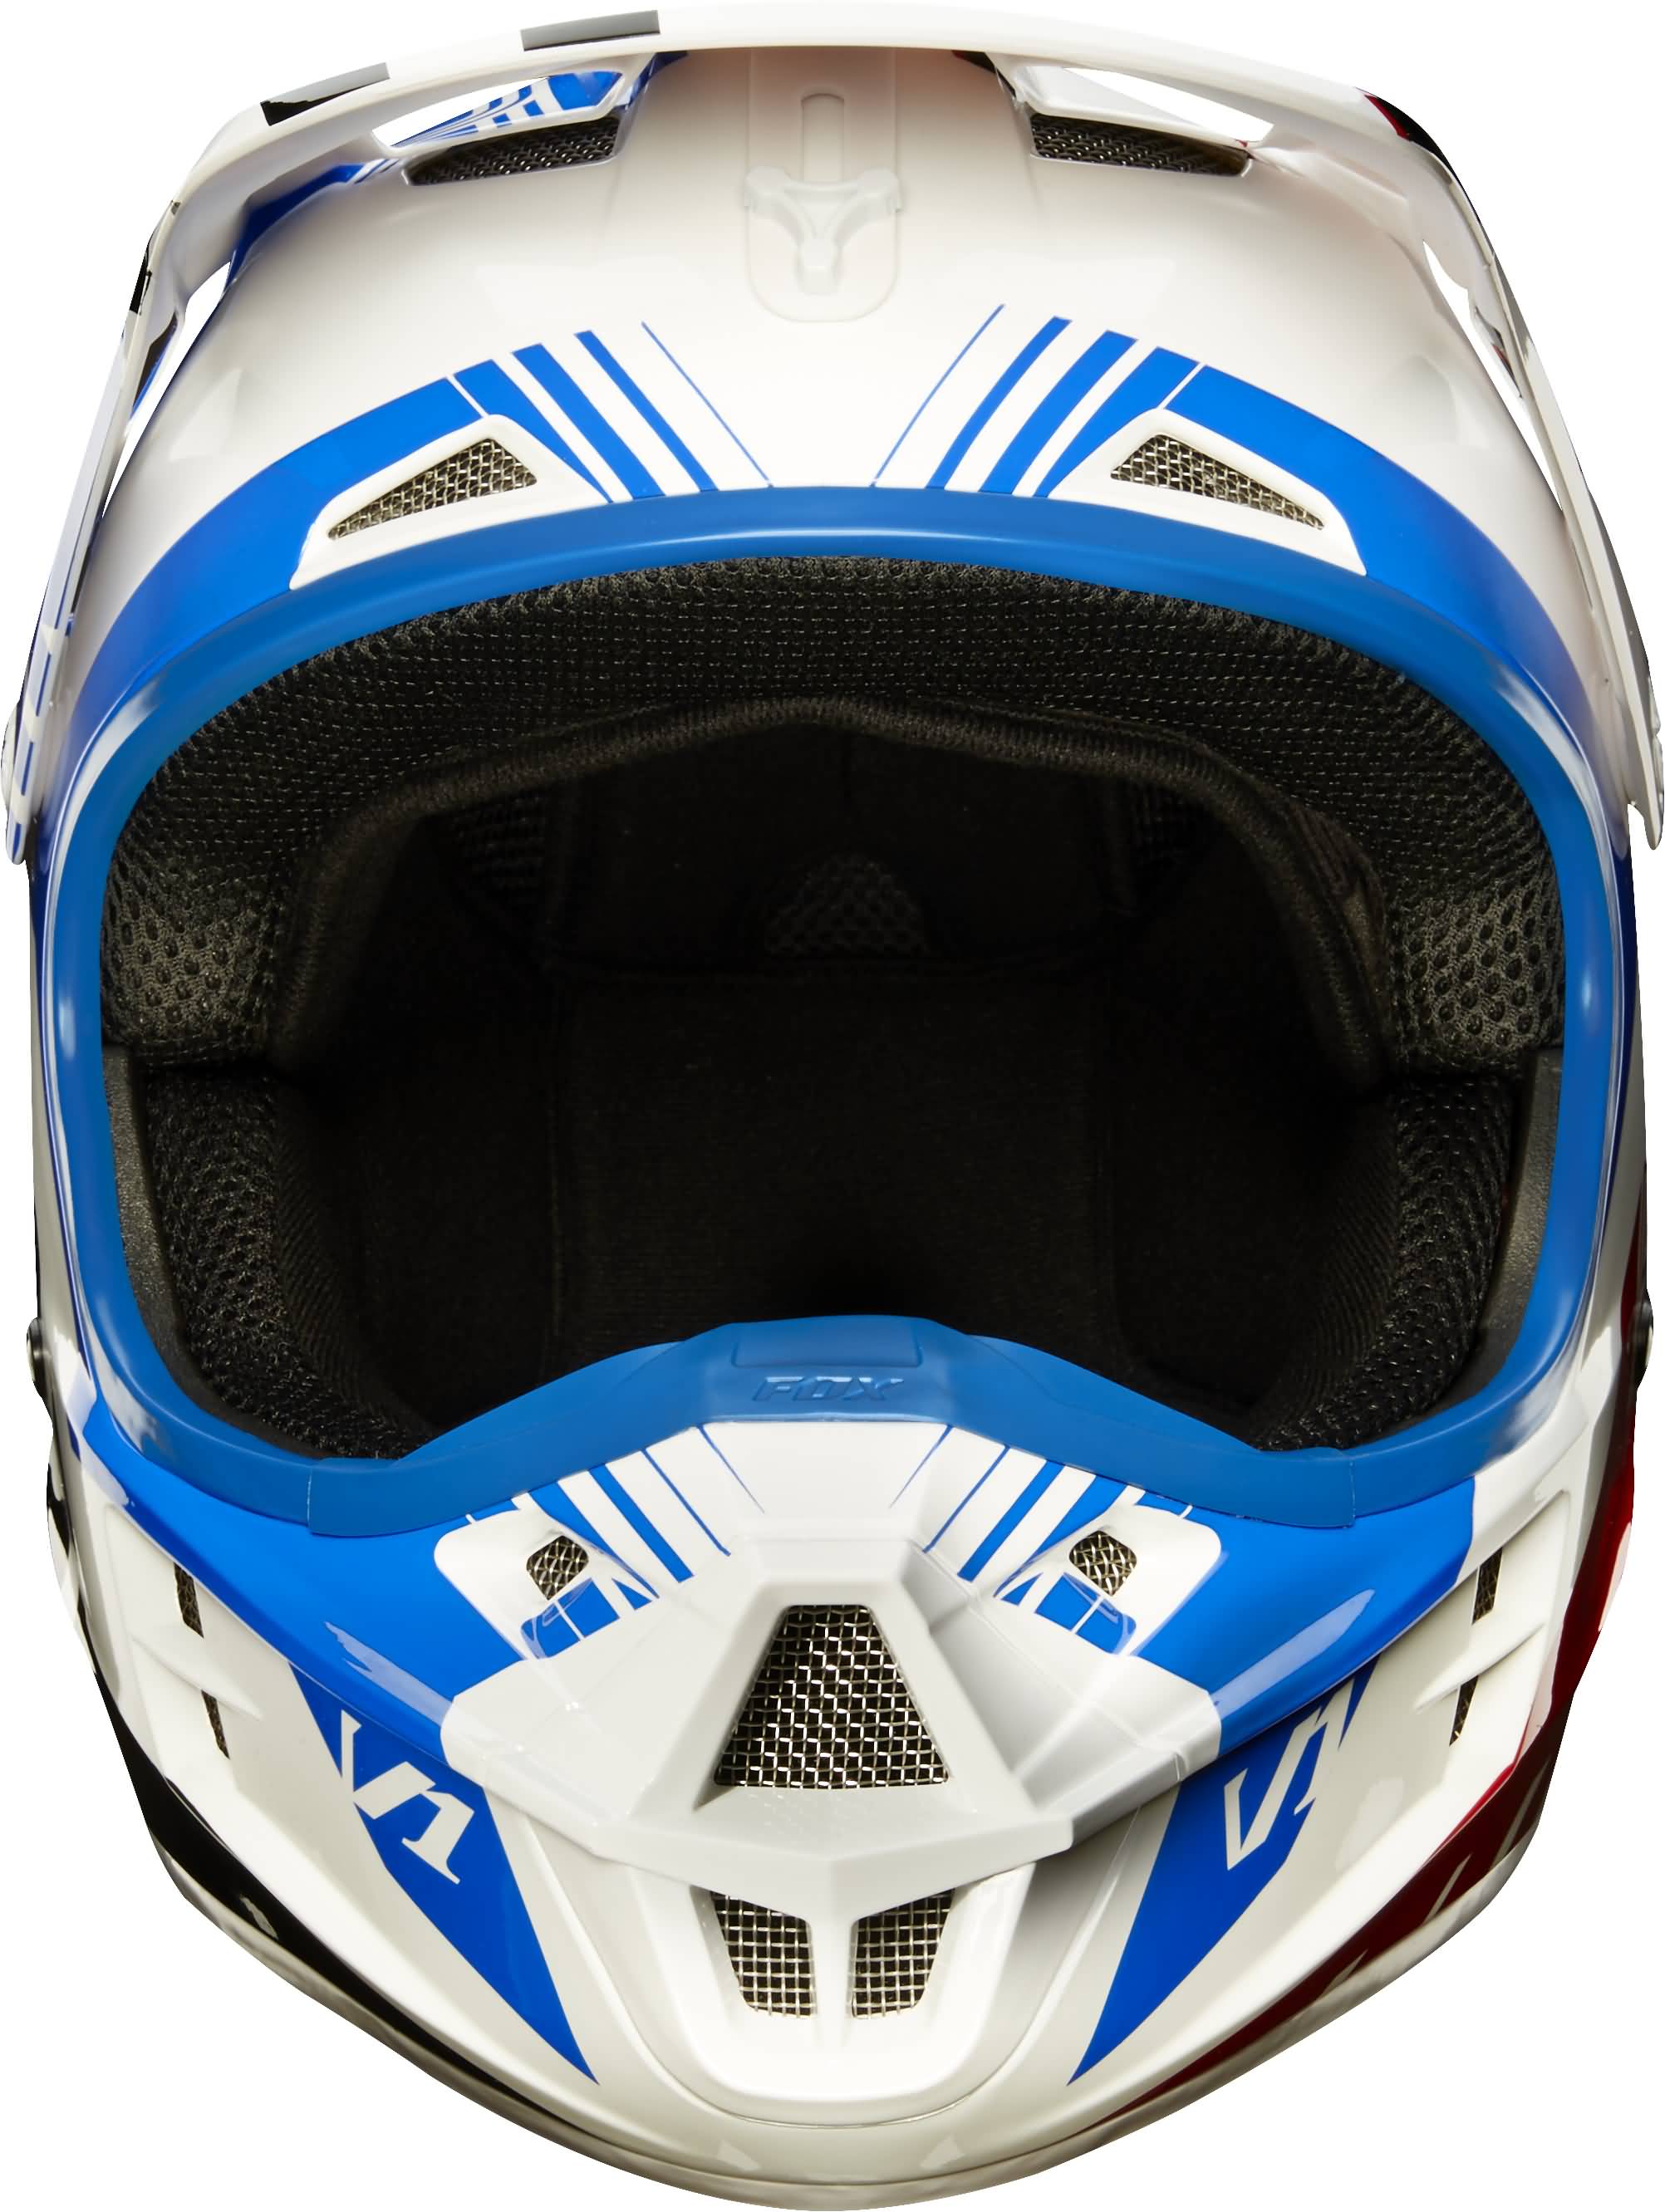 Fox Racing 180 Fiend Special Edition Motocross Gear MX Racewear